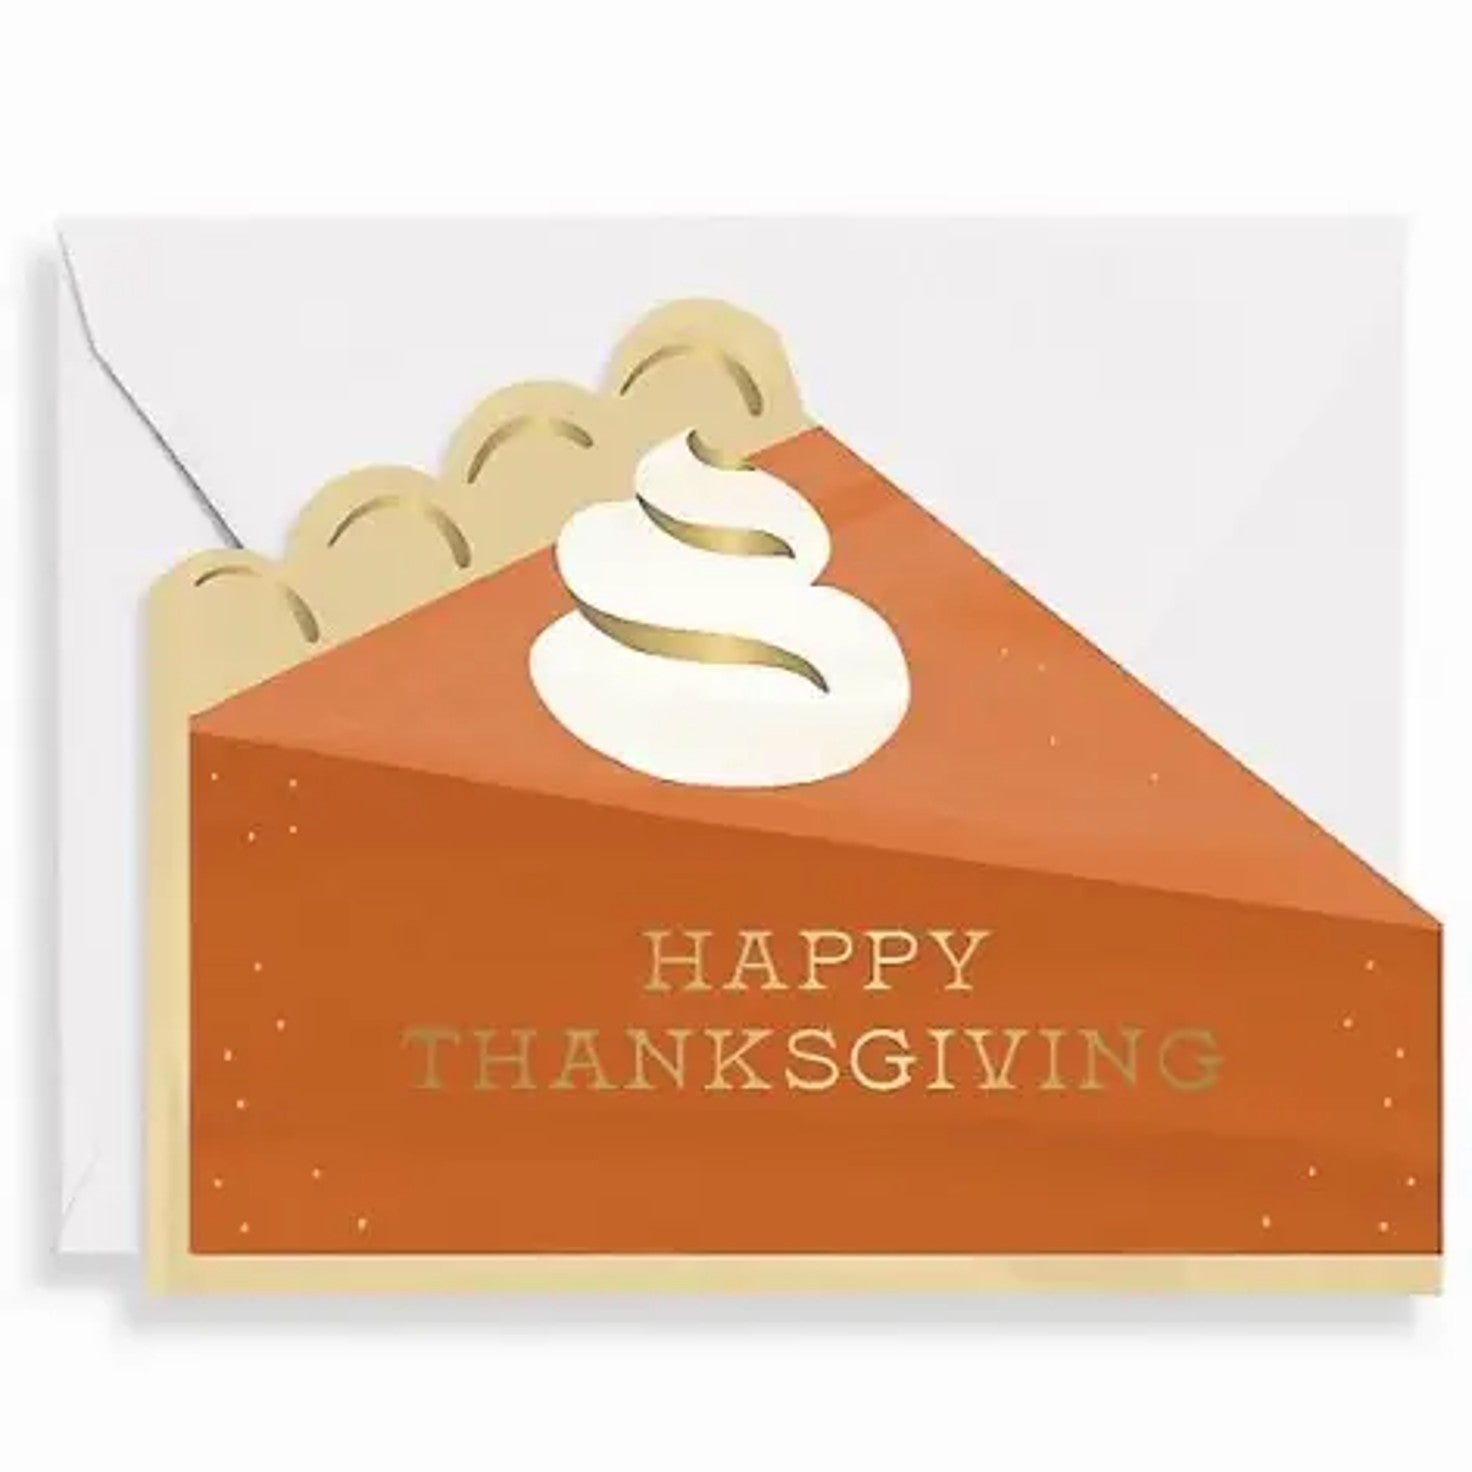 Pumpkin Pie Thanksgiving Card